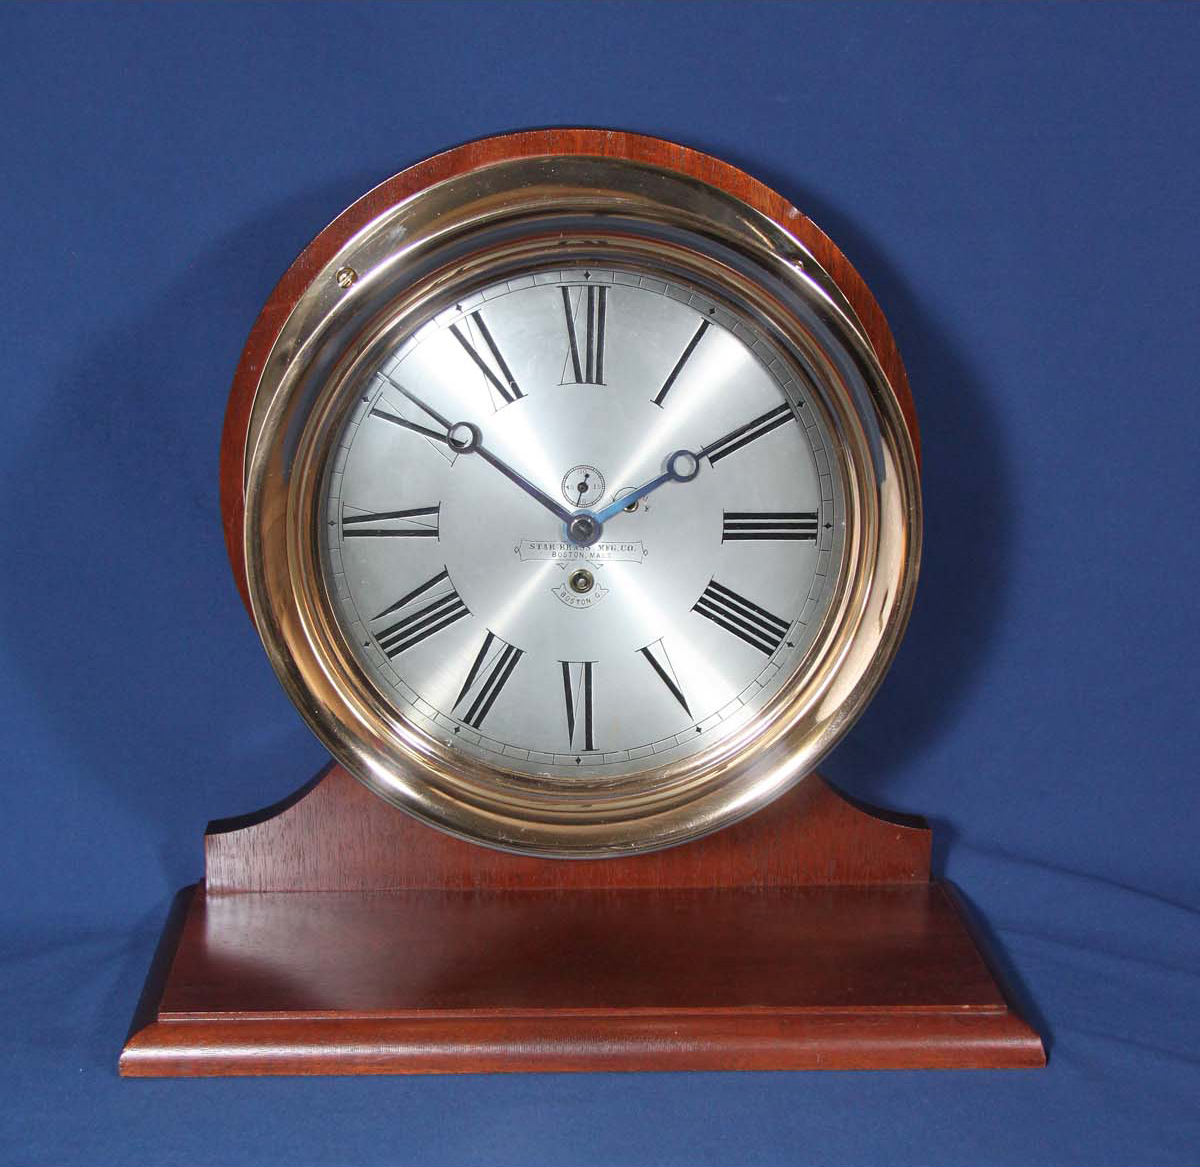 Boston Clock Co. 10 inch Marine Clock for Star Brass Mfg. Co. and Star Brass Revolution Counter